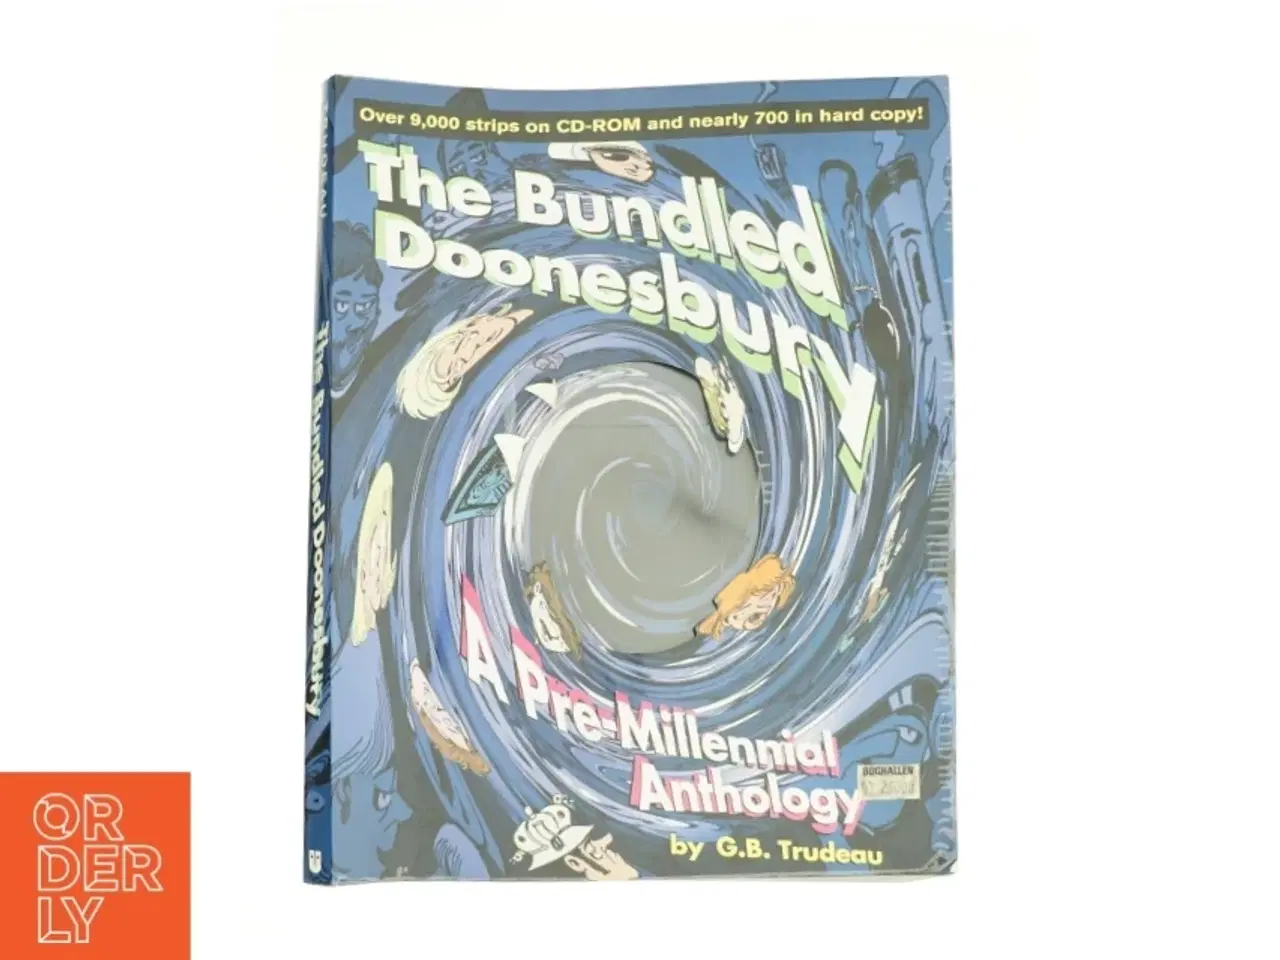 Billede 1 - Bundled Doonesbury : a Pre-Millennial Anthology by Garry, Brown, Kenneth T., Unknown Trudeau af G. B. Trudeau (Bog)